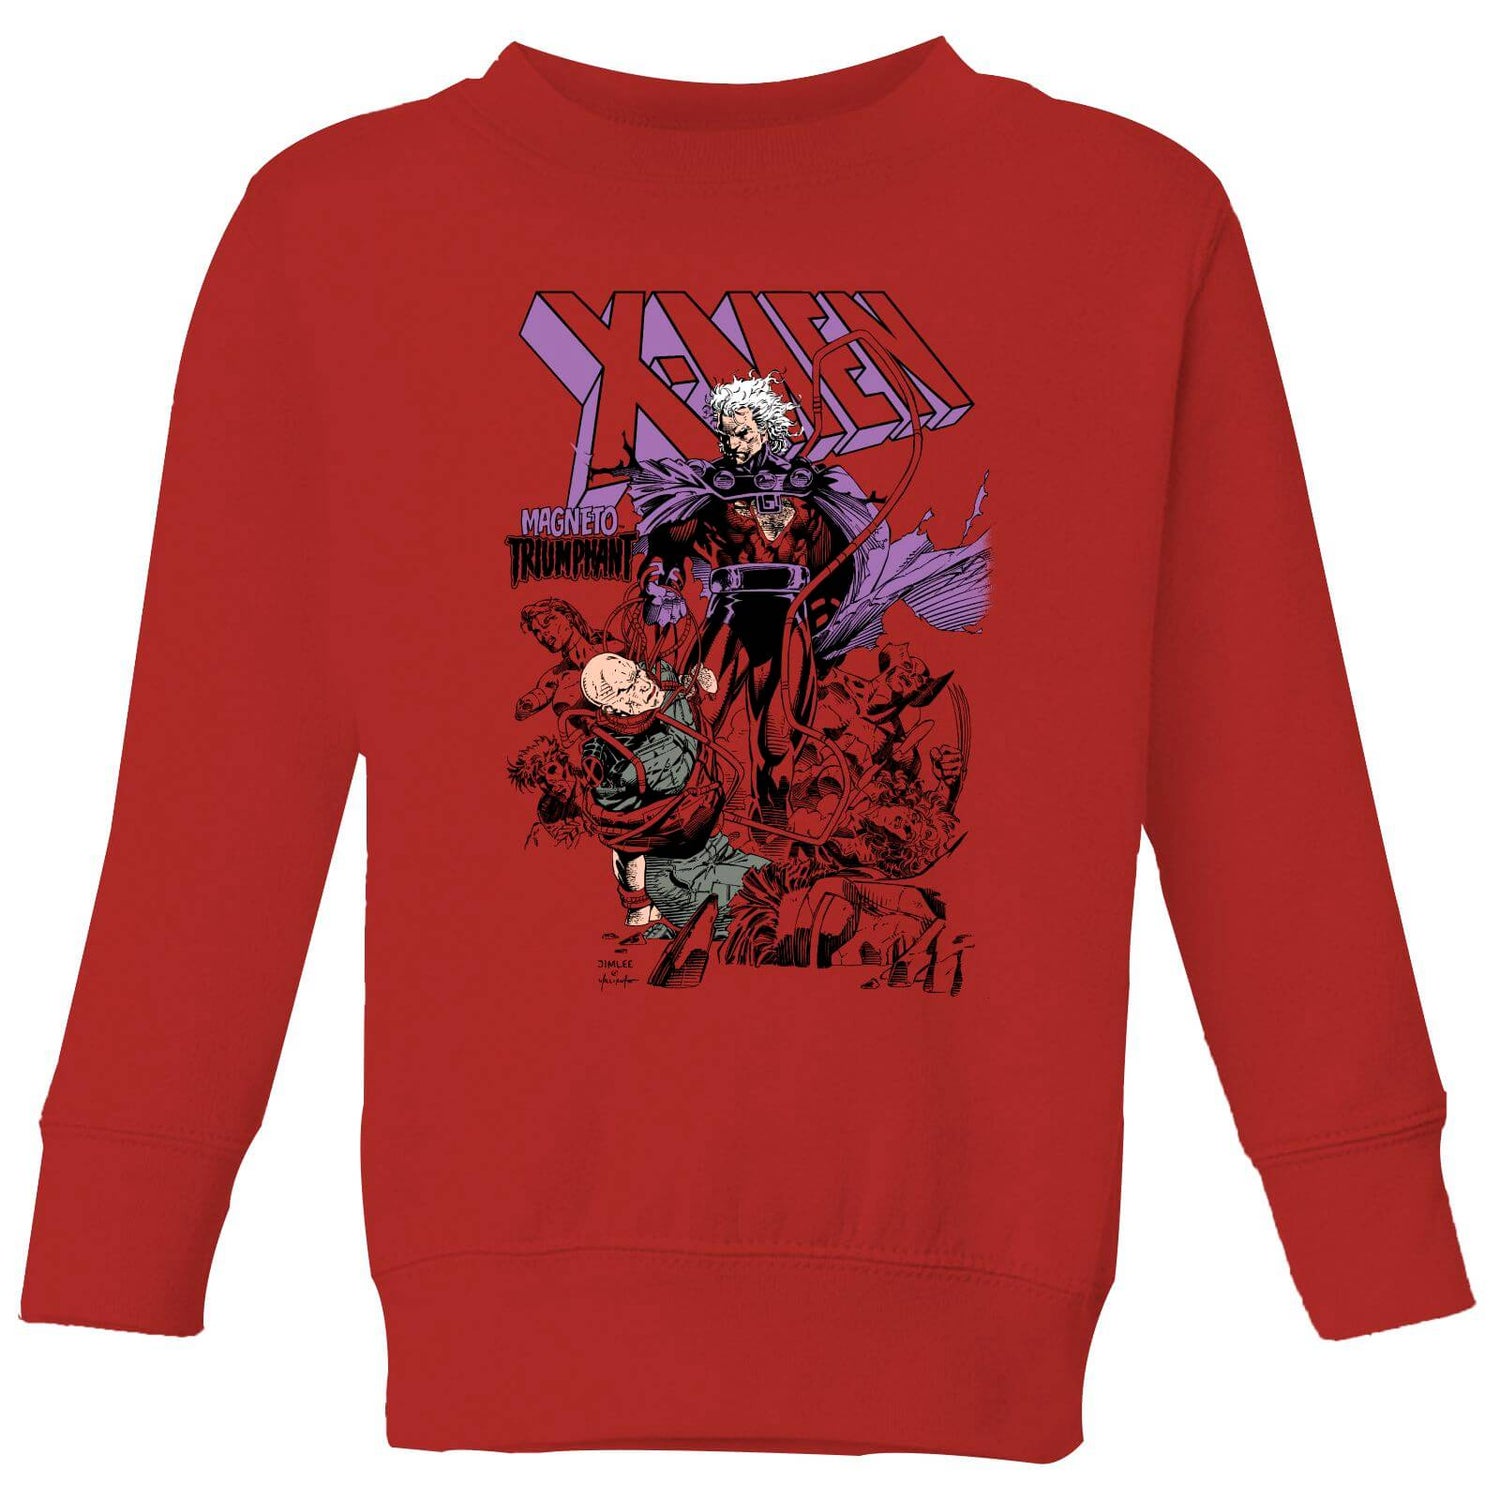 X-Men Magneto Triumphant  Kids' Sweatshirt - Red